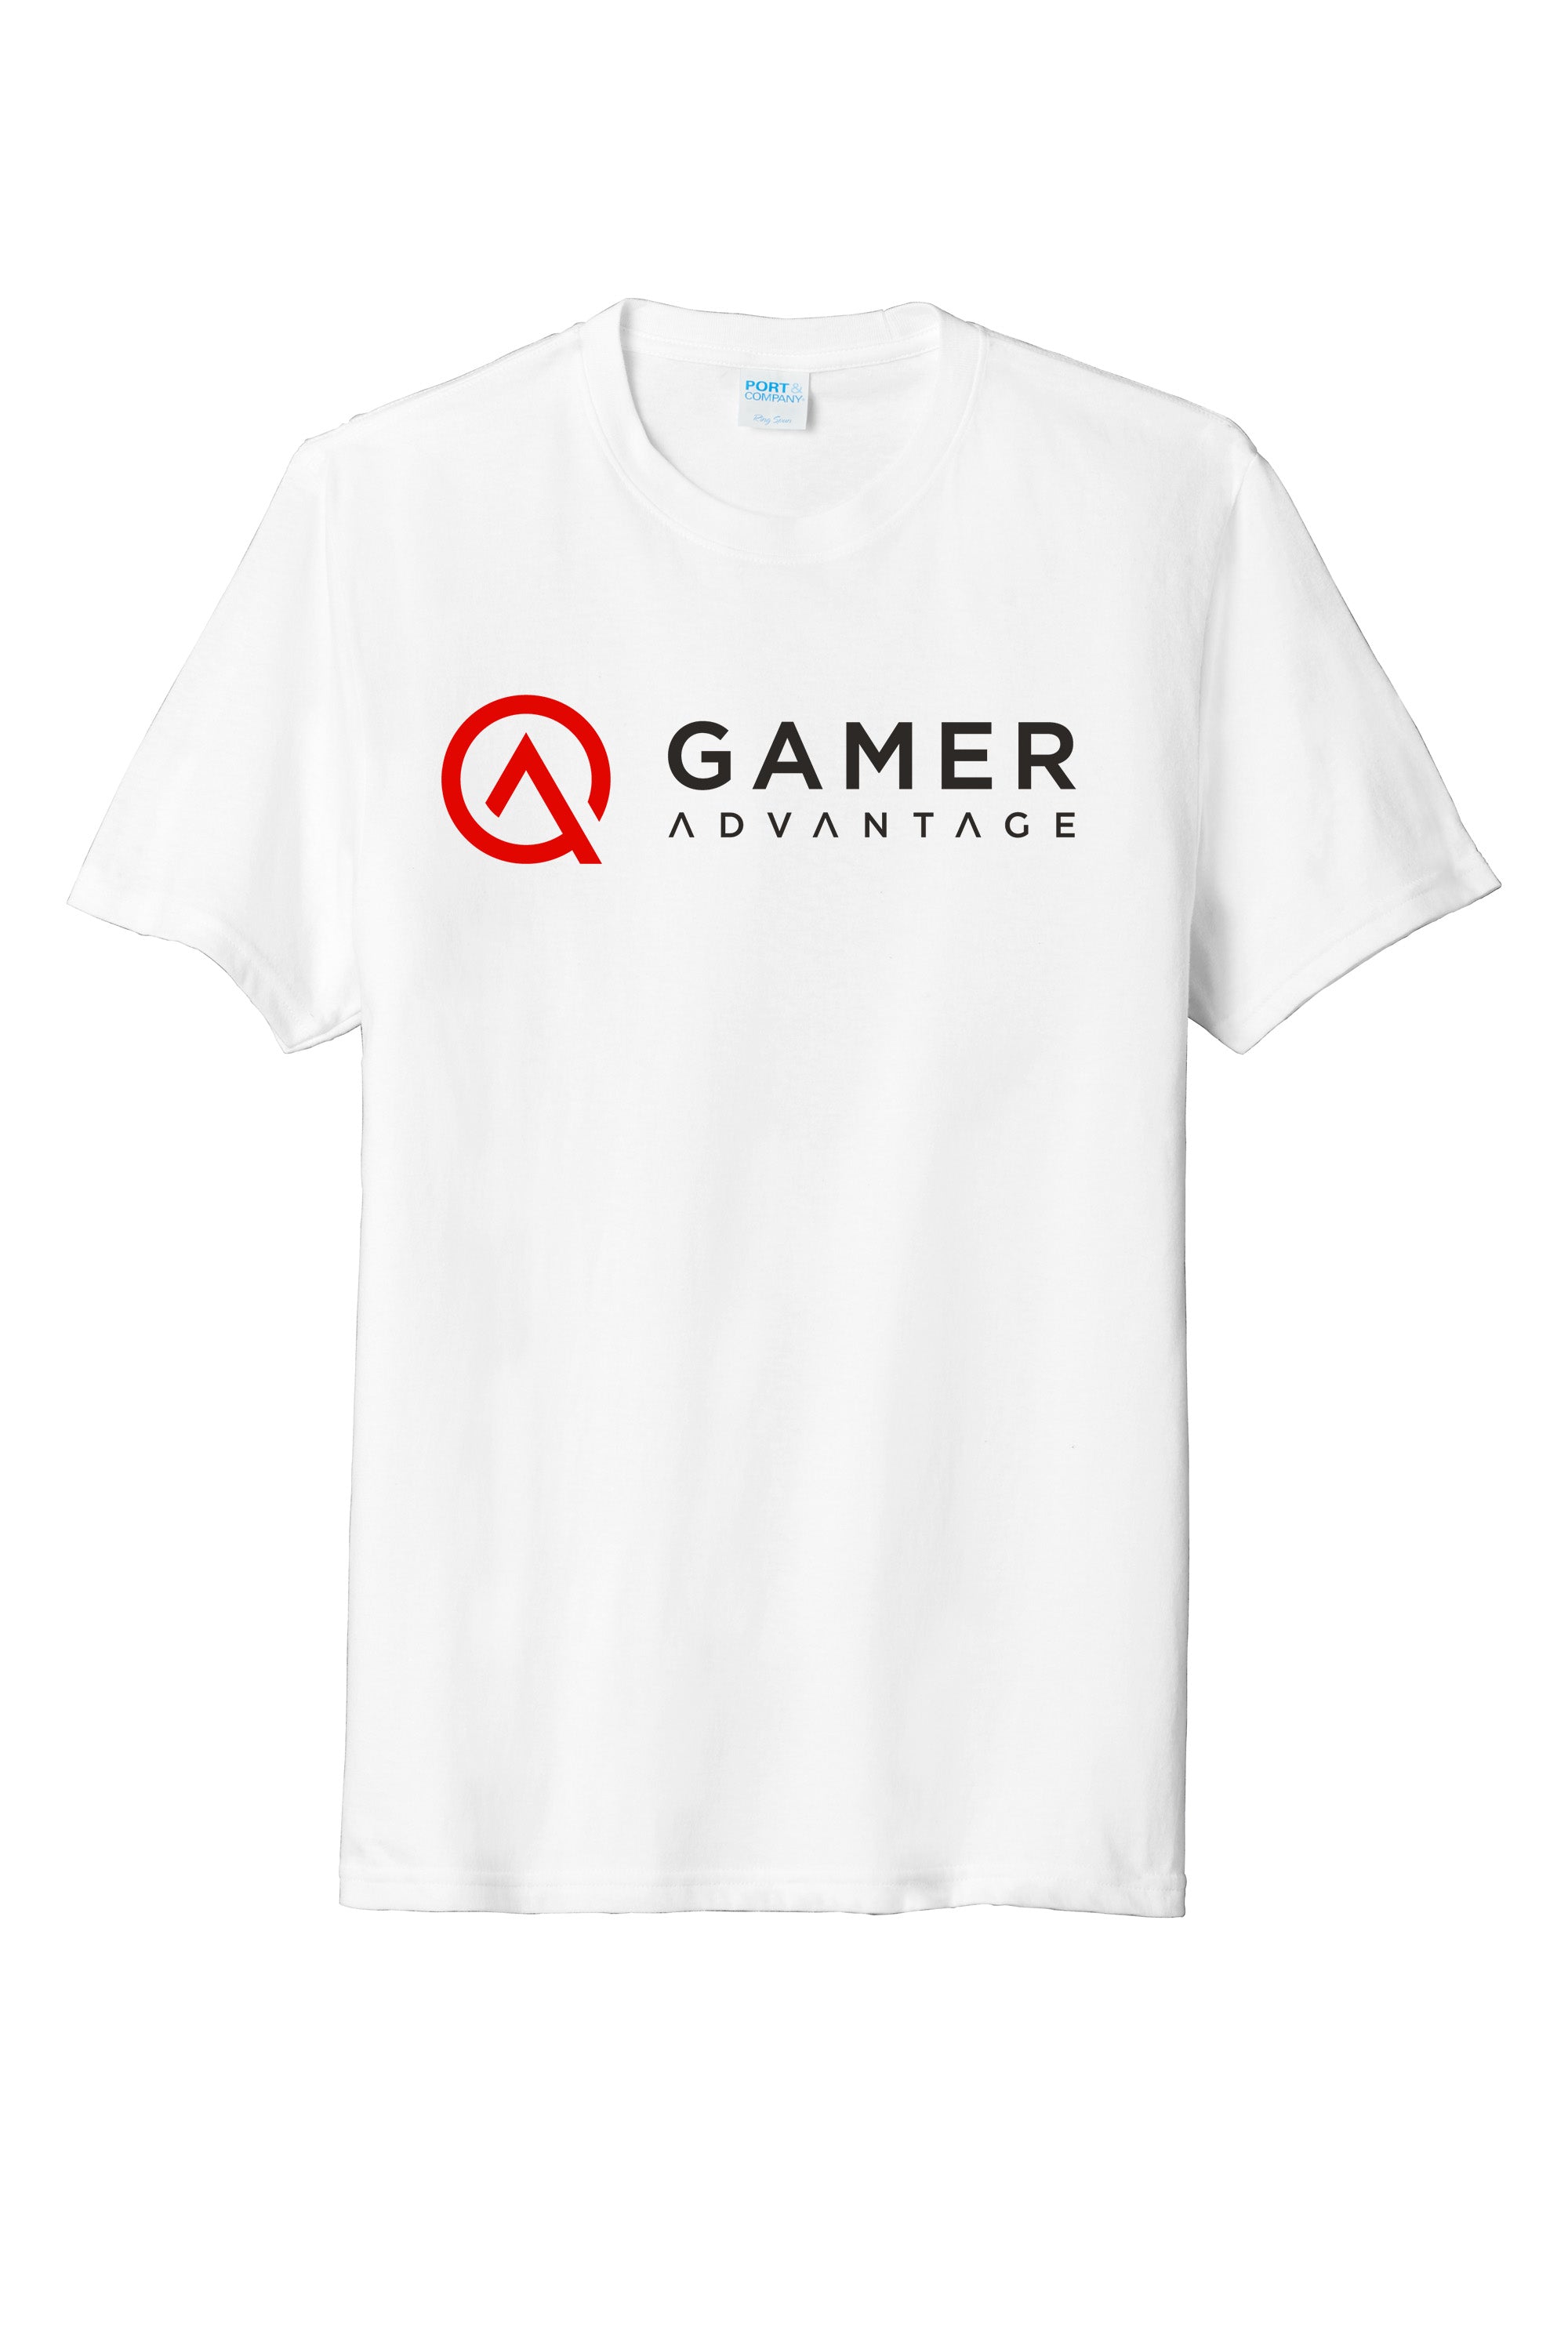 Gamer Advantage | Street Series | [DTF] Unisex Short Sleeve T-Shirt {#GADV004}